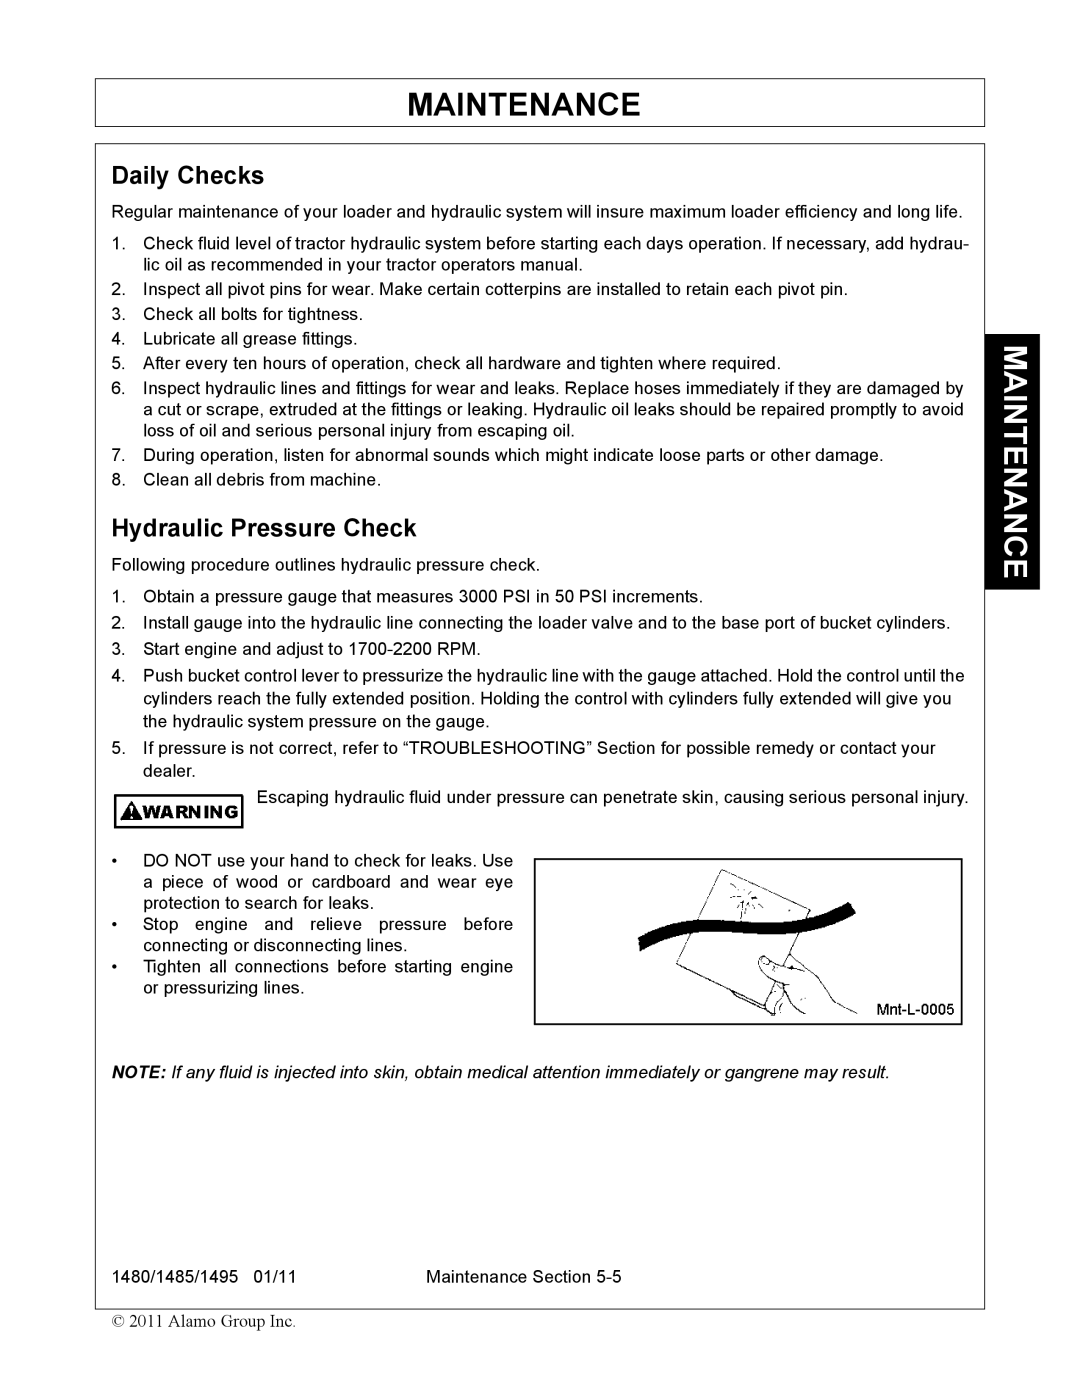 Servis-Rhino 1480, 1485, 1495 manual Daily Checks, Hydraulic Pressure Check 